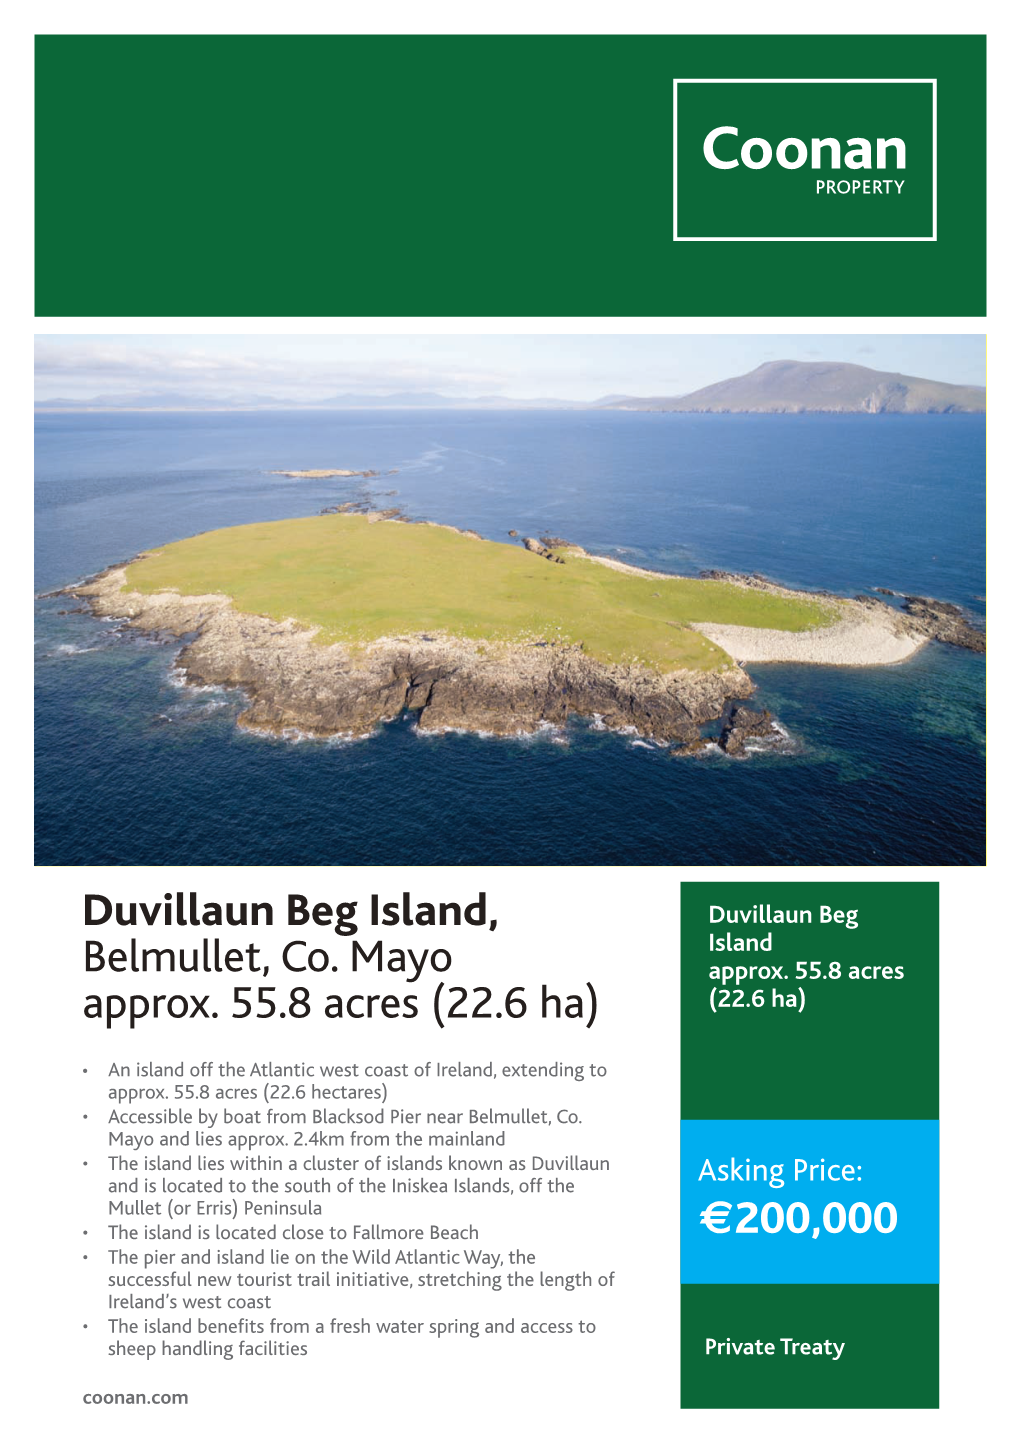 Duvillaun Beg Island, Belmullet, Co. Mayo Approx. 55.8 Acres (22.6